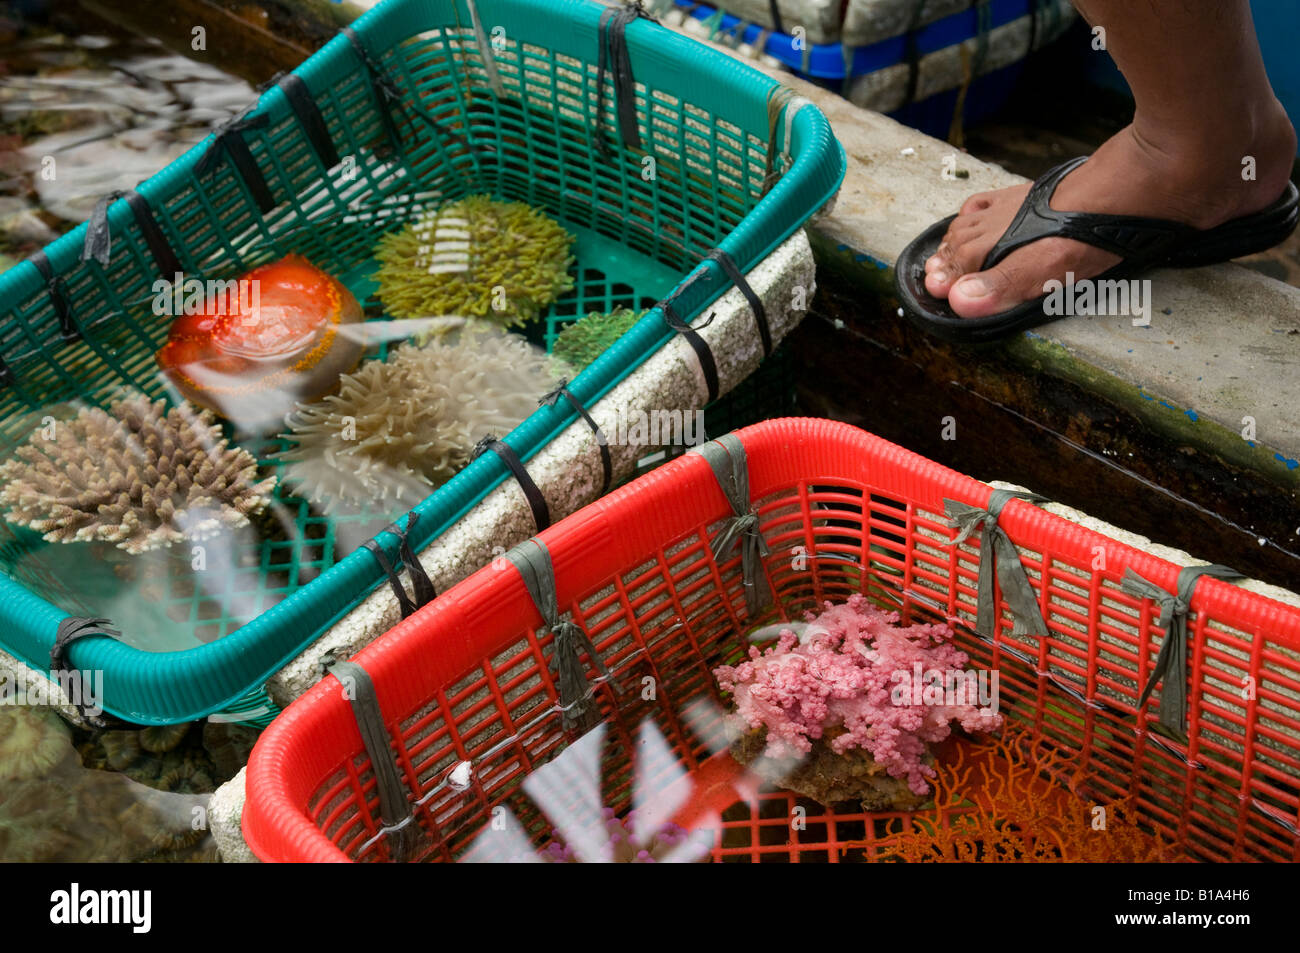 Indonesia Jakarta Arlequin Aquatic Coral Farm close up di coralli in basket Foto Stock